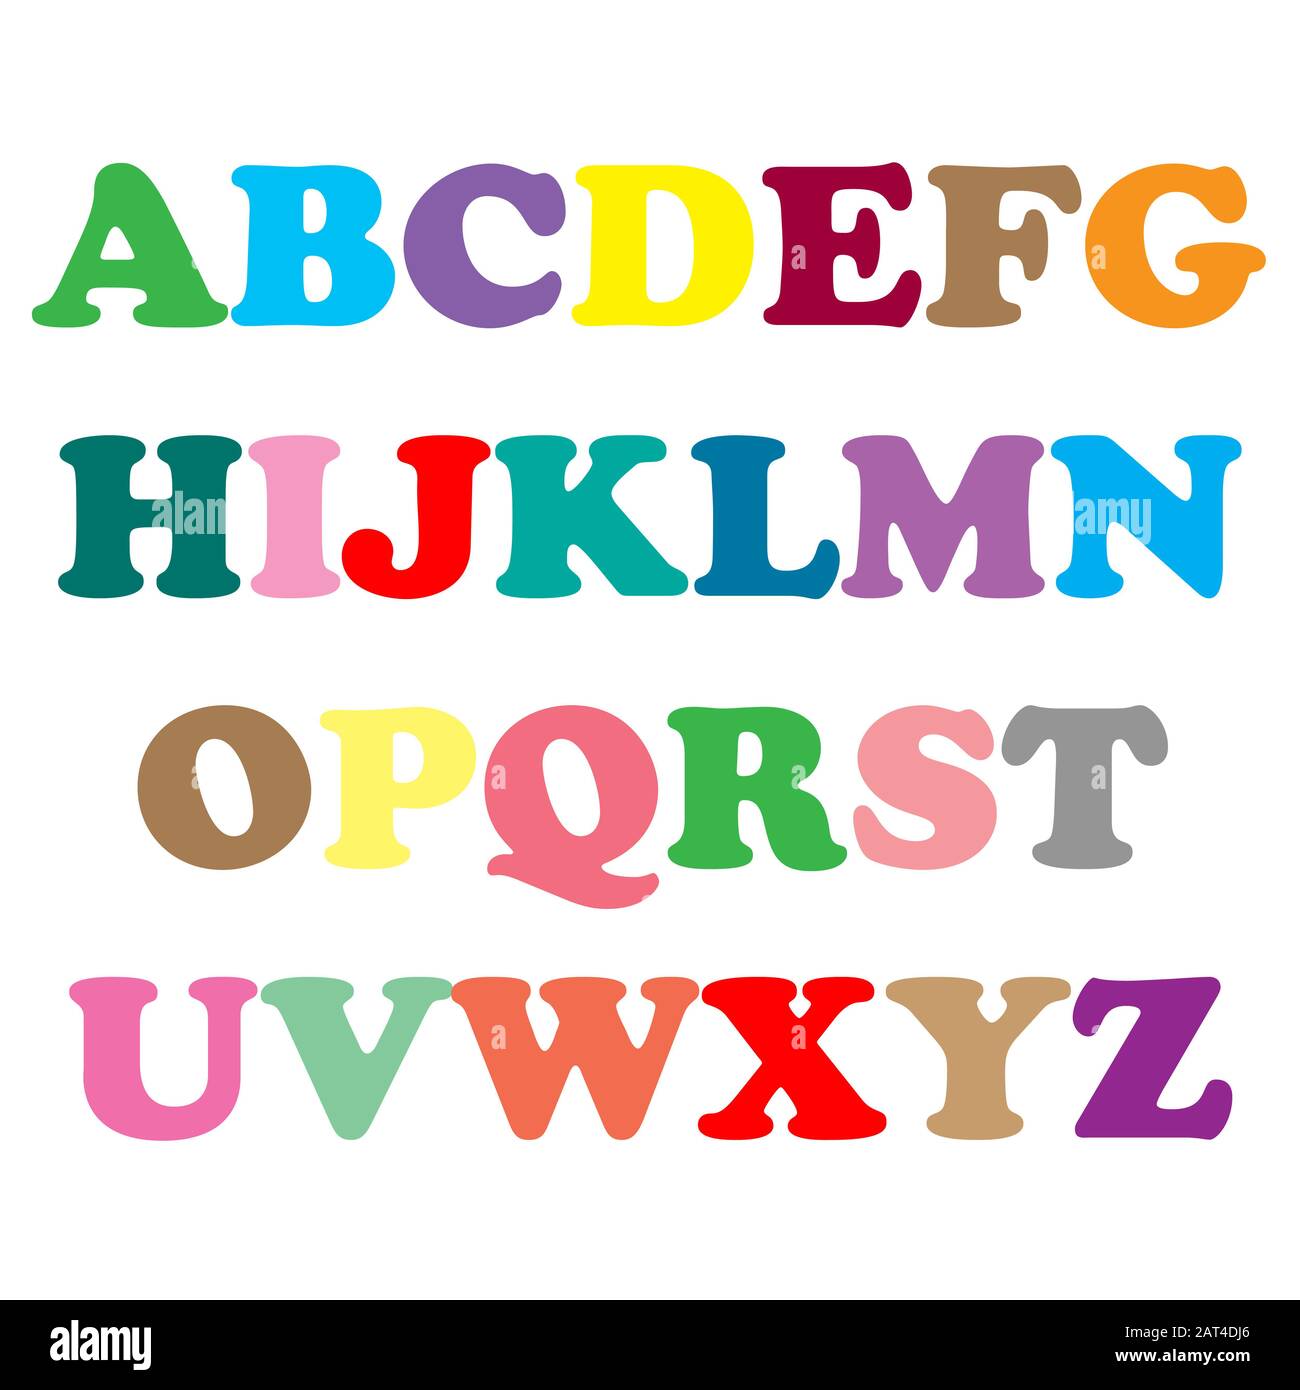 Colorful alphabet letters illustration Stock Photo - Alamy